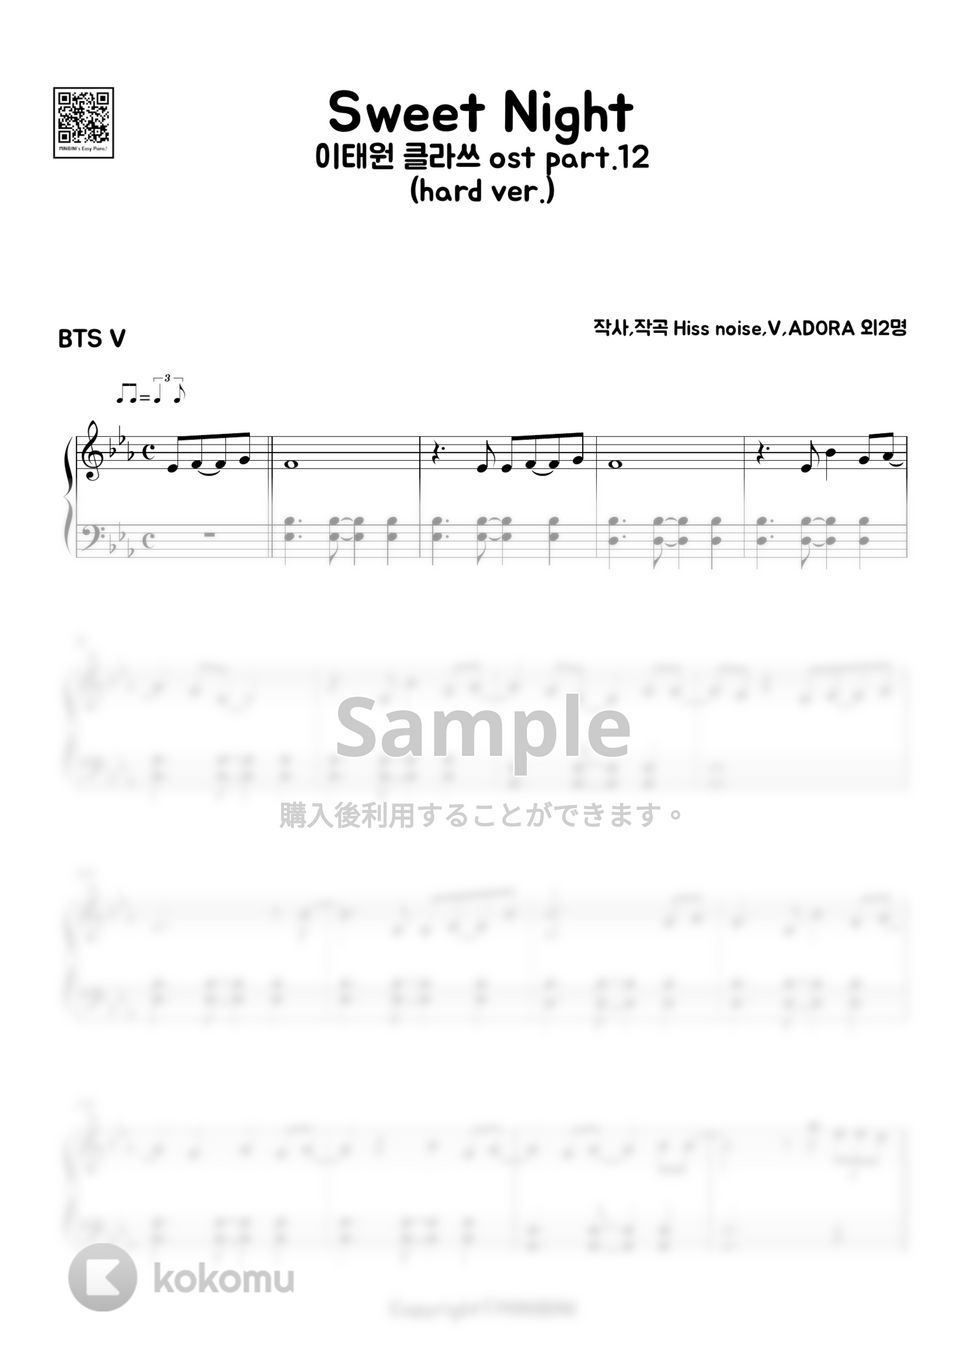 V (BTS) - Sweet Night (梨泰院クラス OST / Hard ver.) by MINIBINI